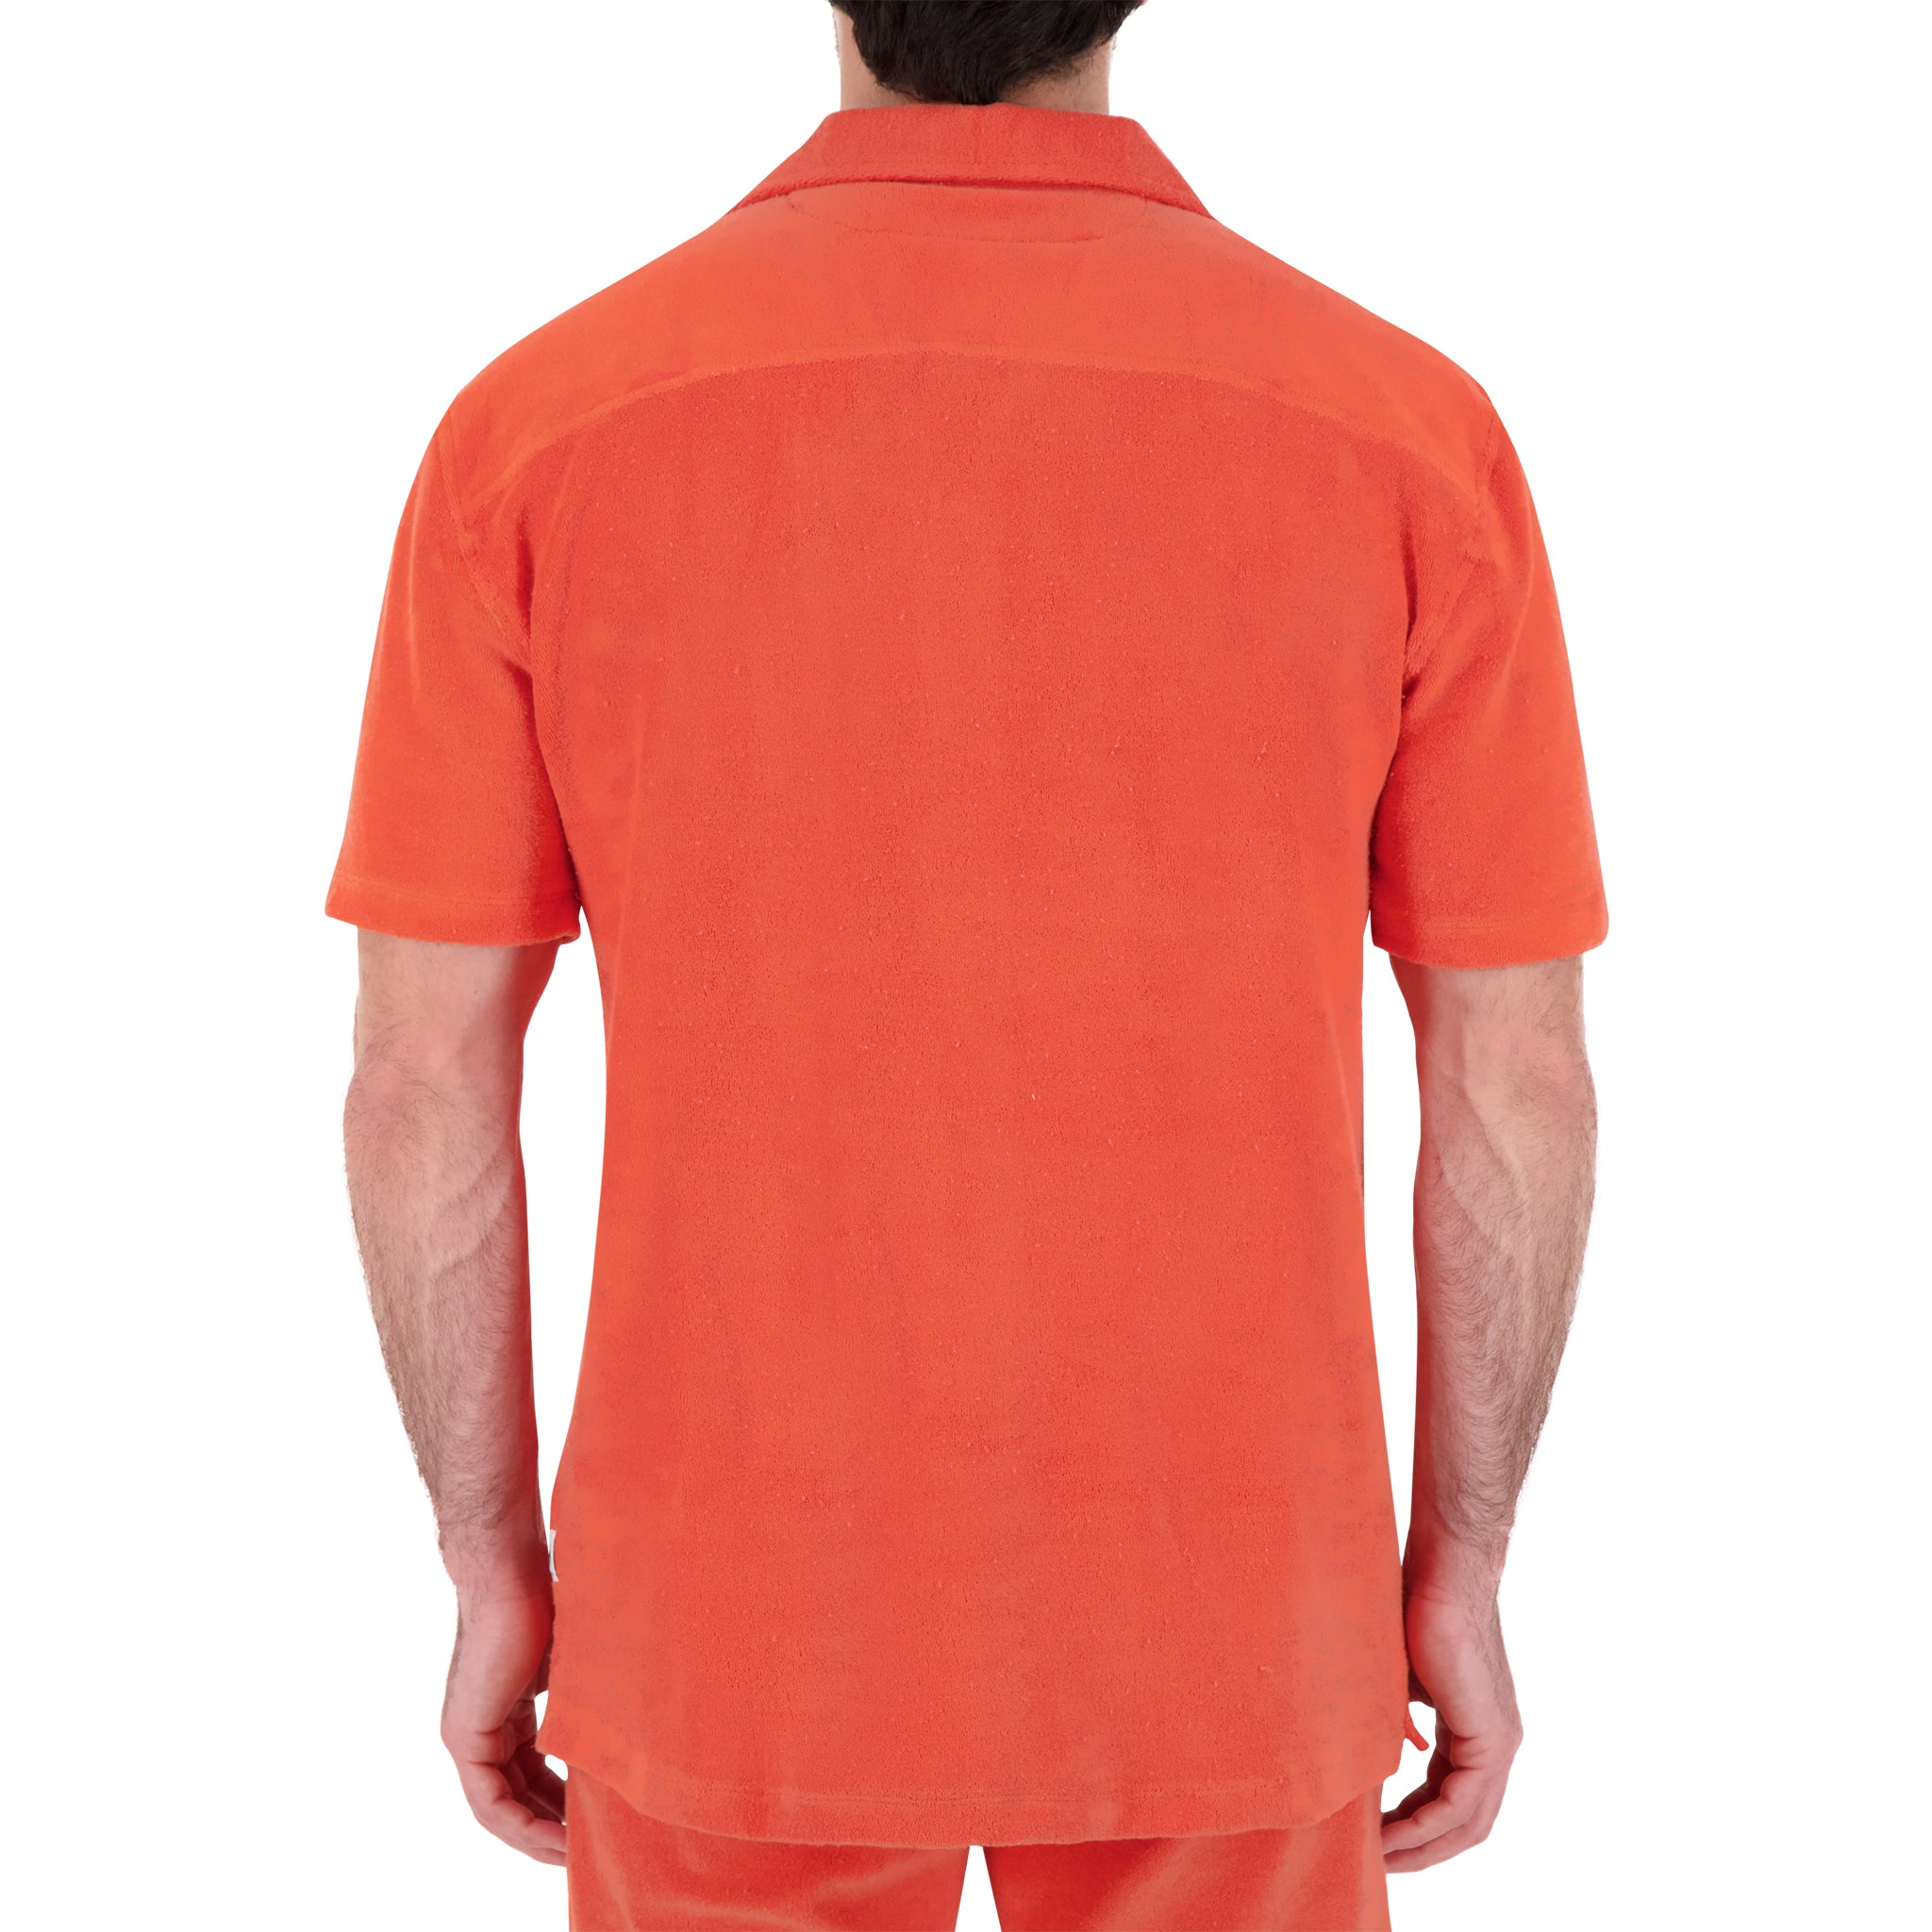 Terry Cloth Camp Shirt in Carnelian Orange